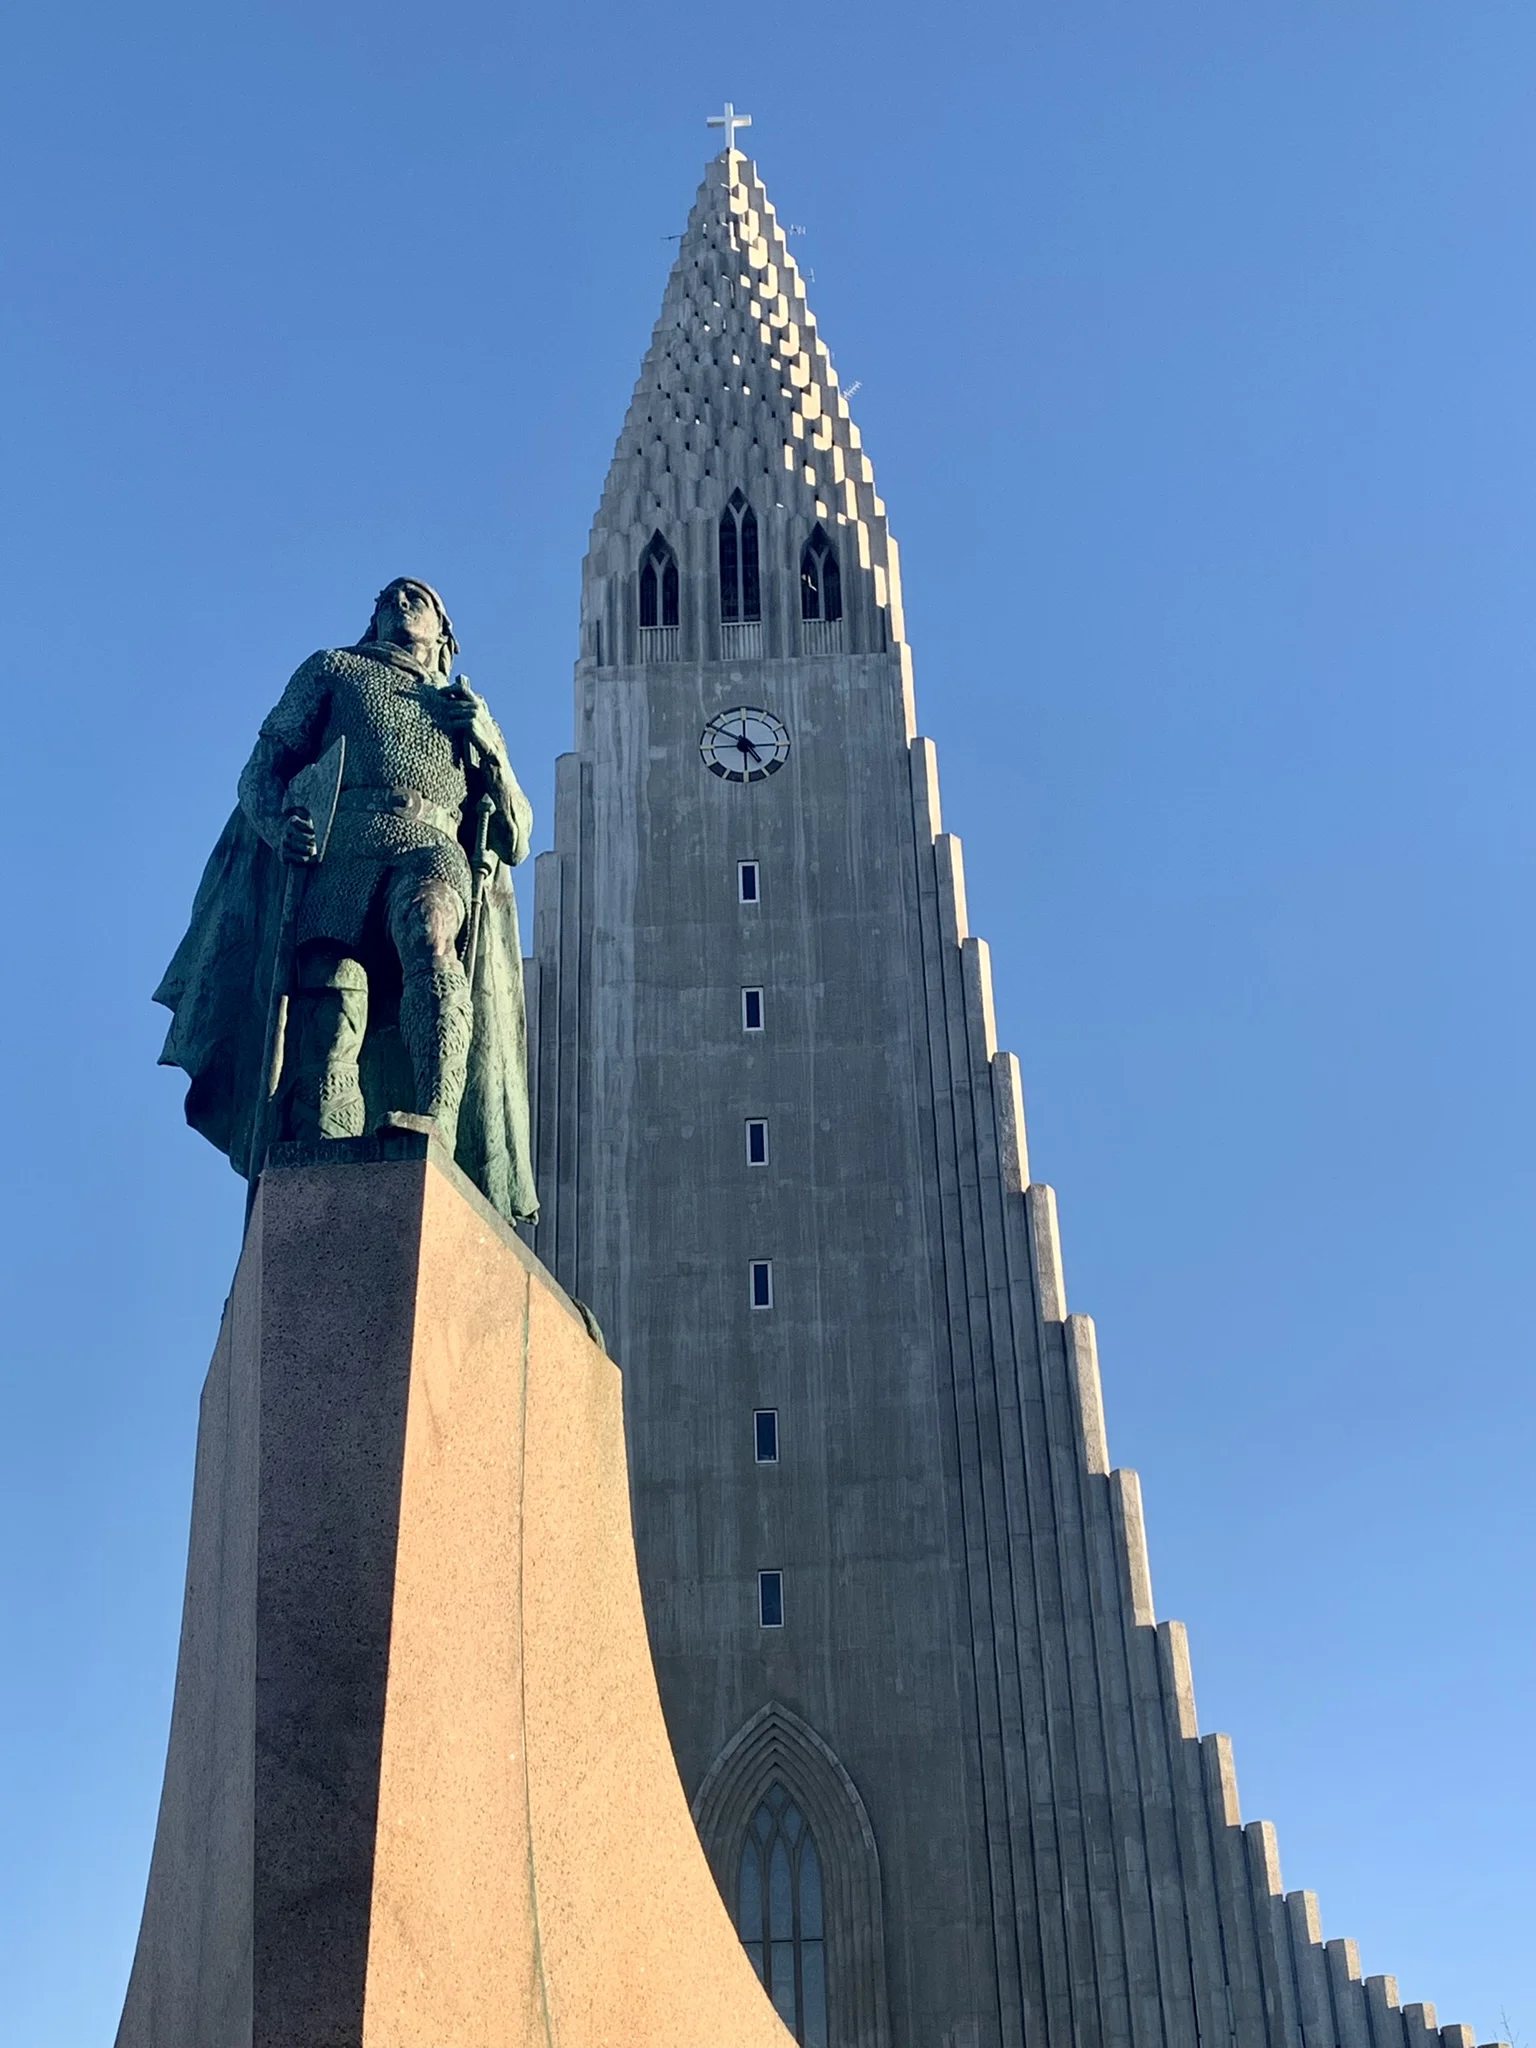 leif erikson statue in reykjavik iceland